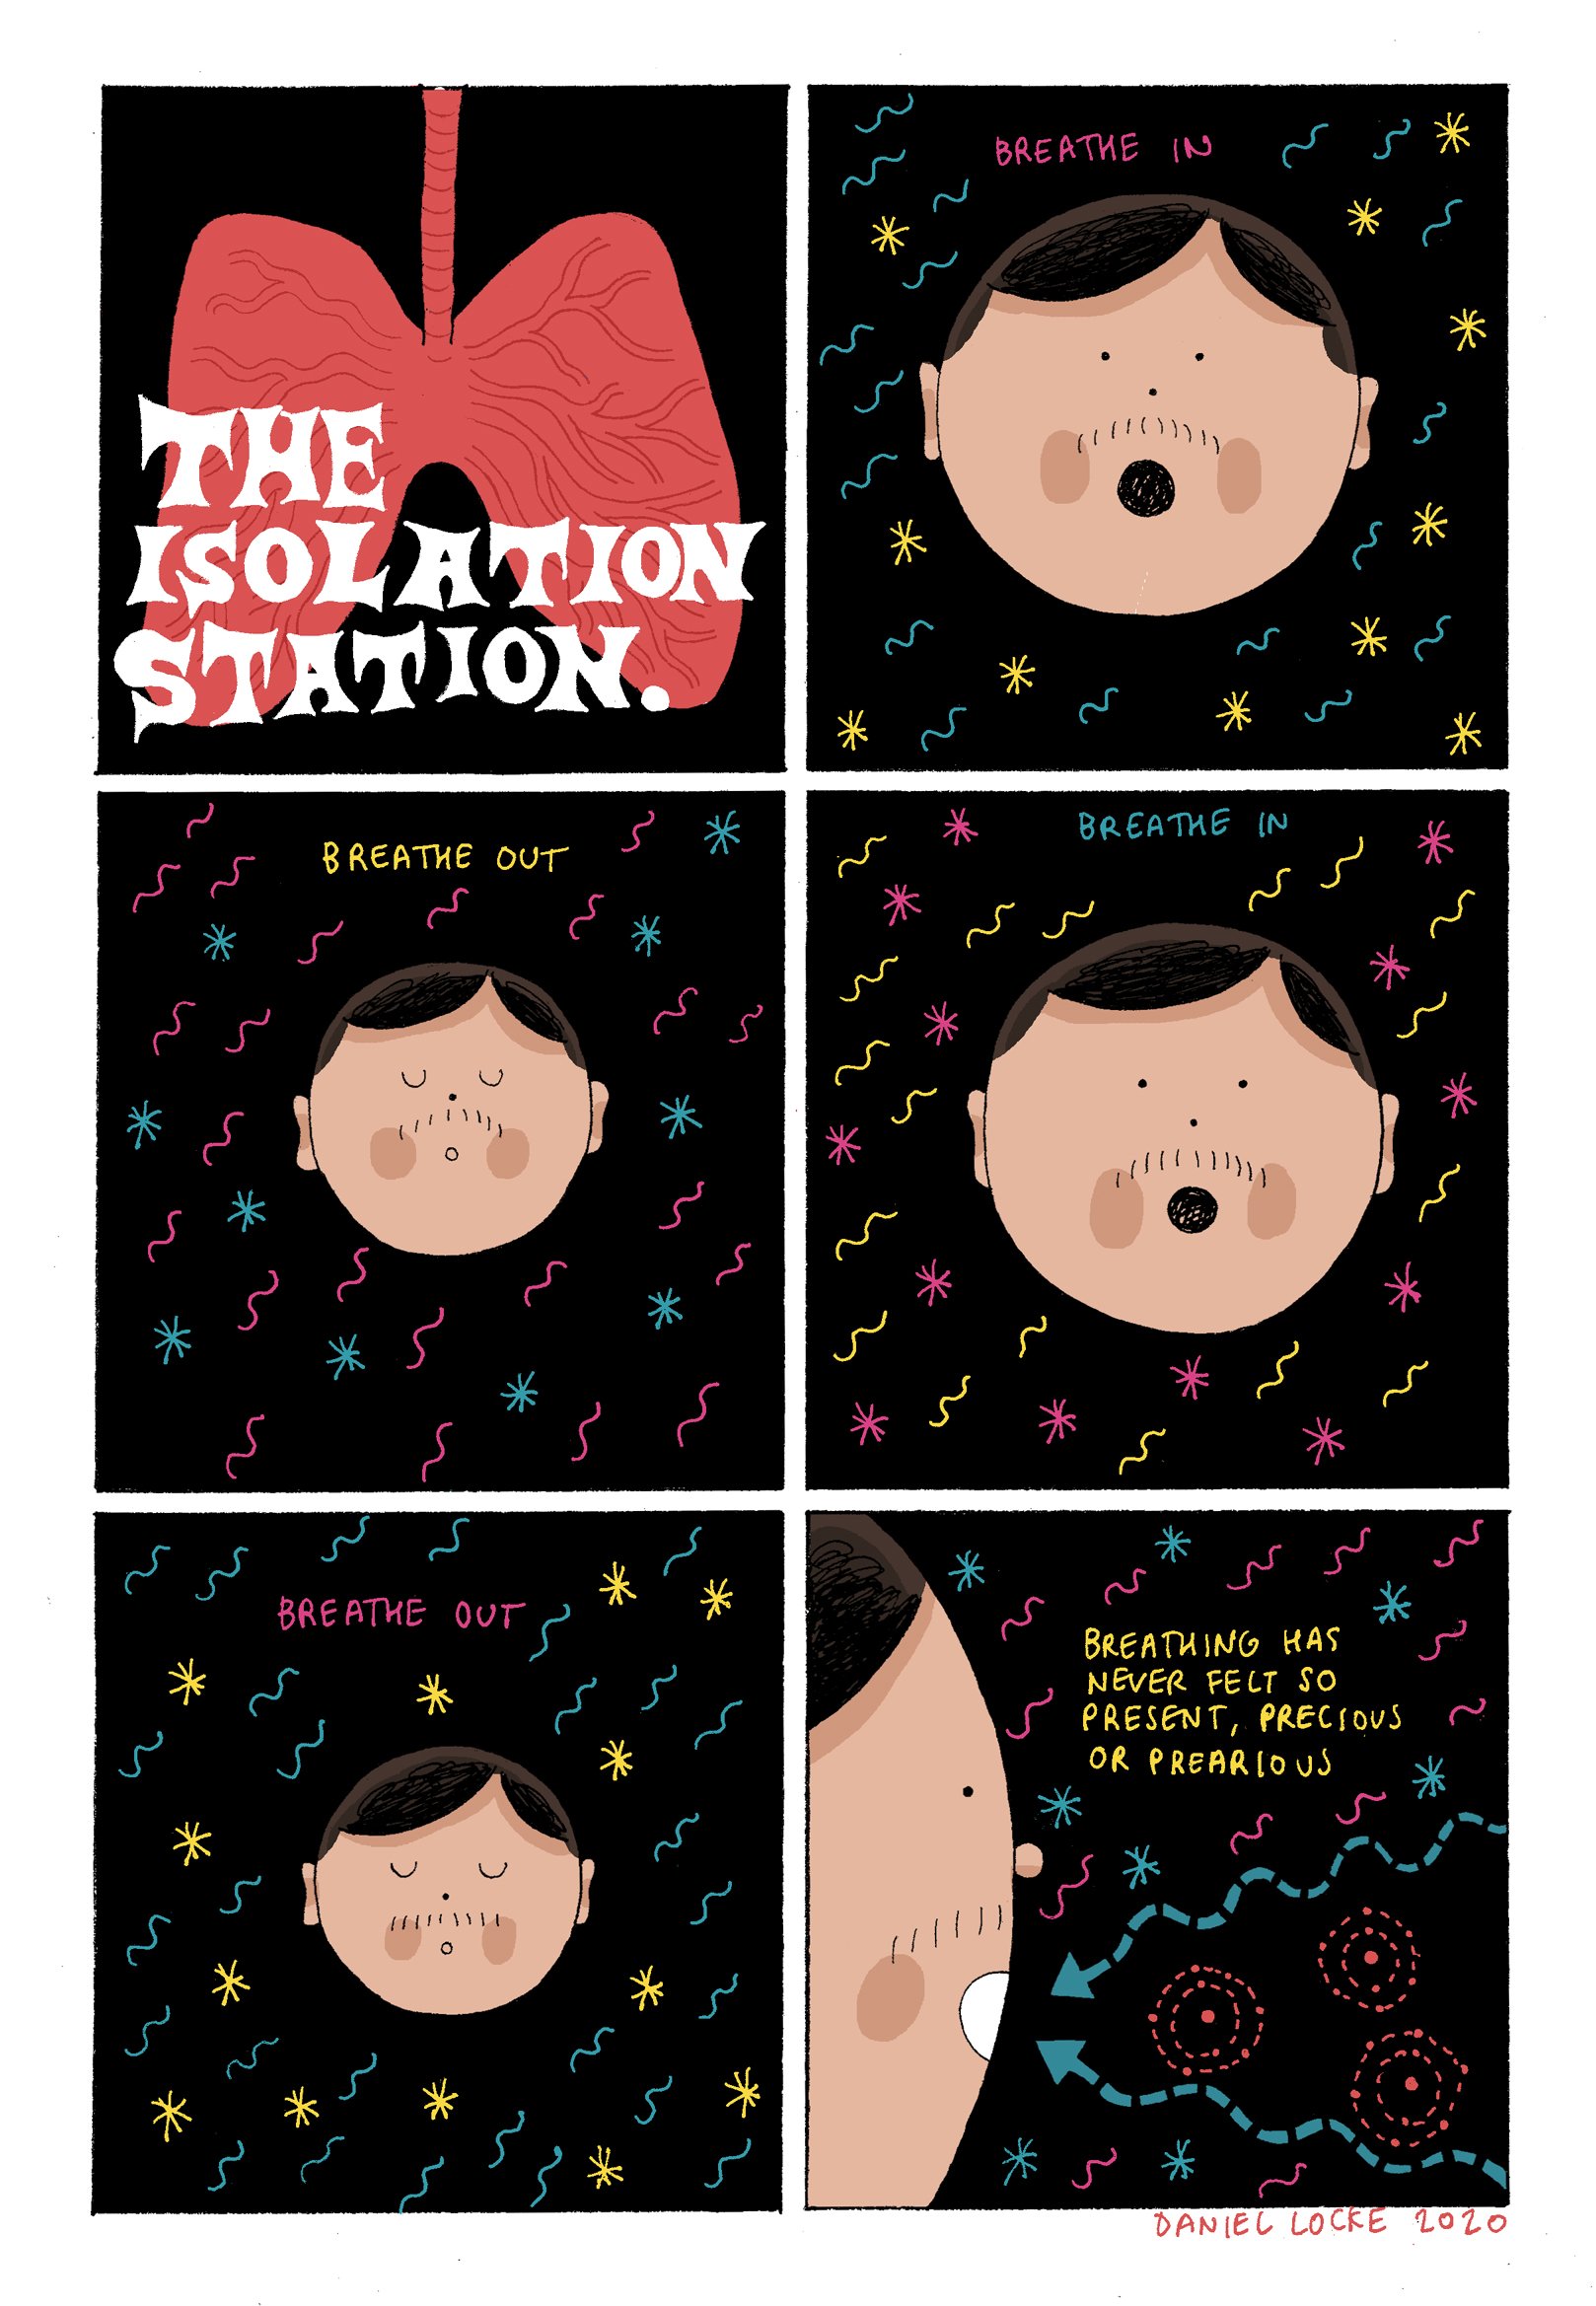 Isolation Station 9 FLAT.jpg